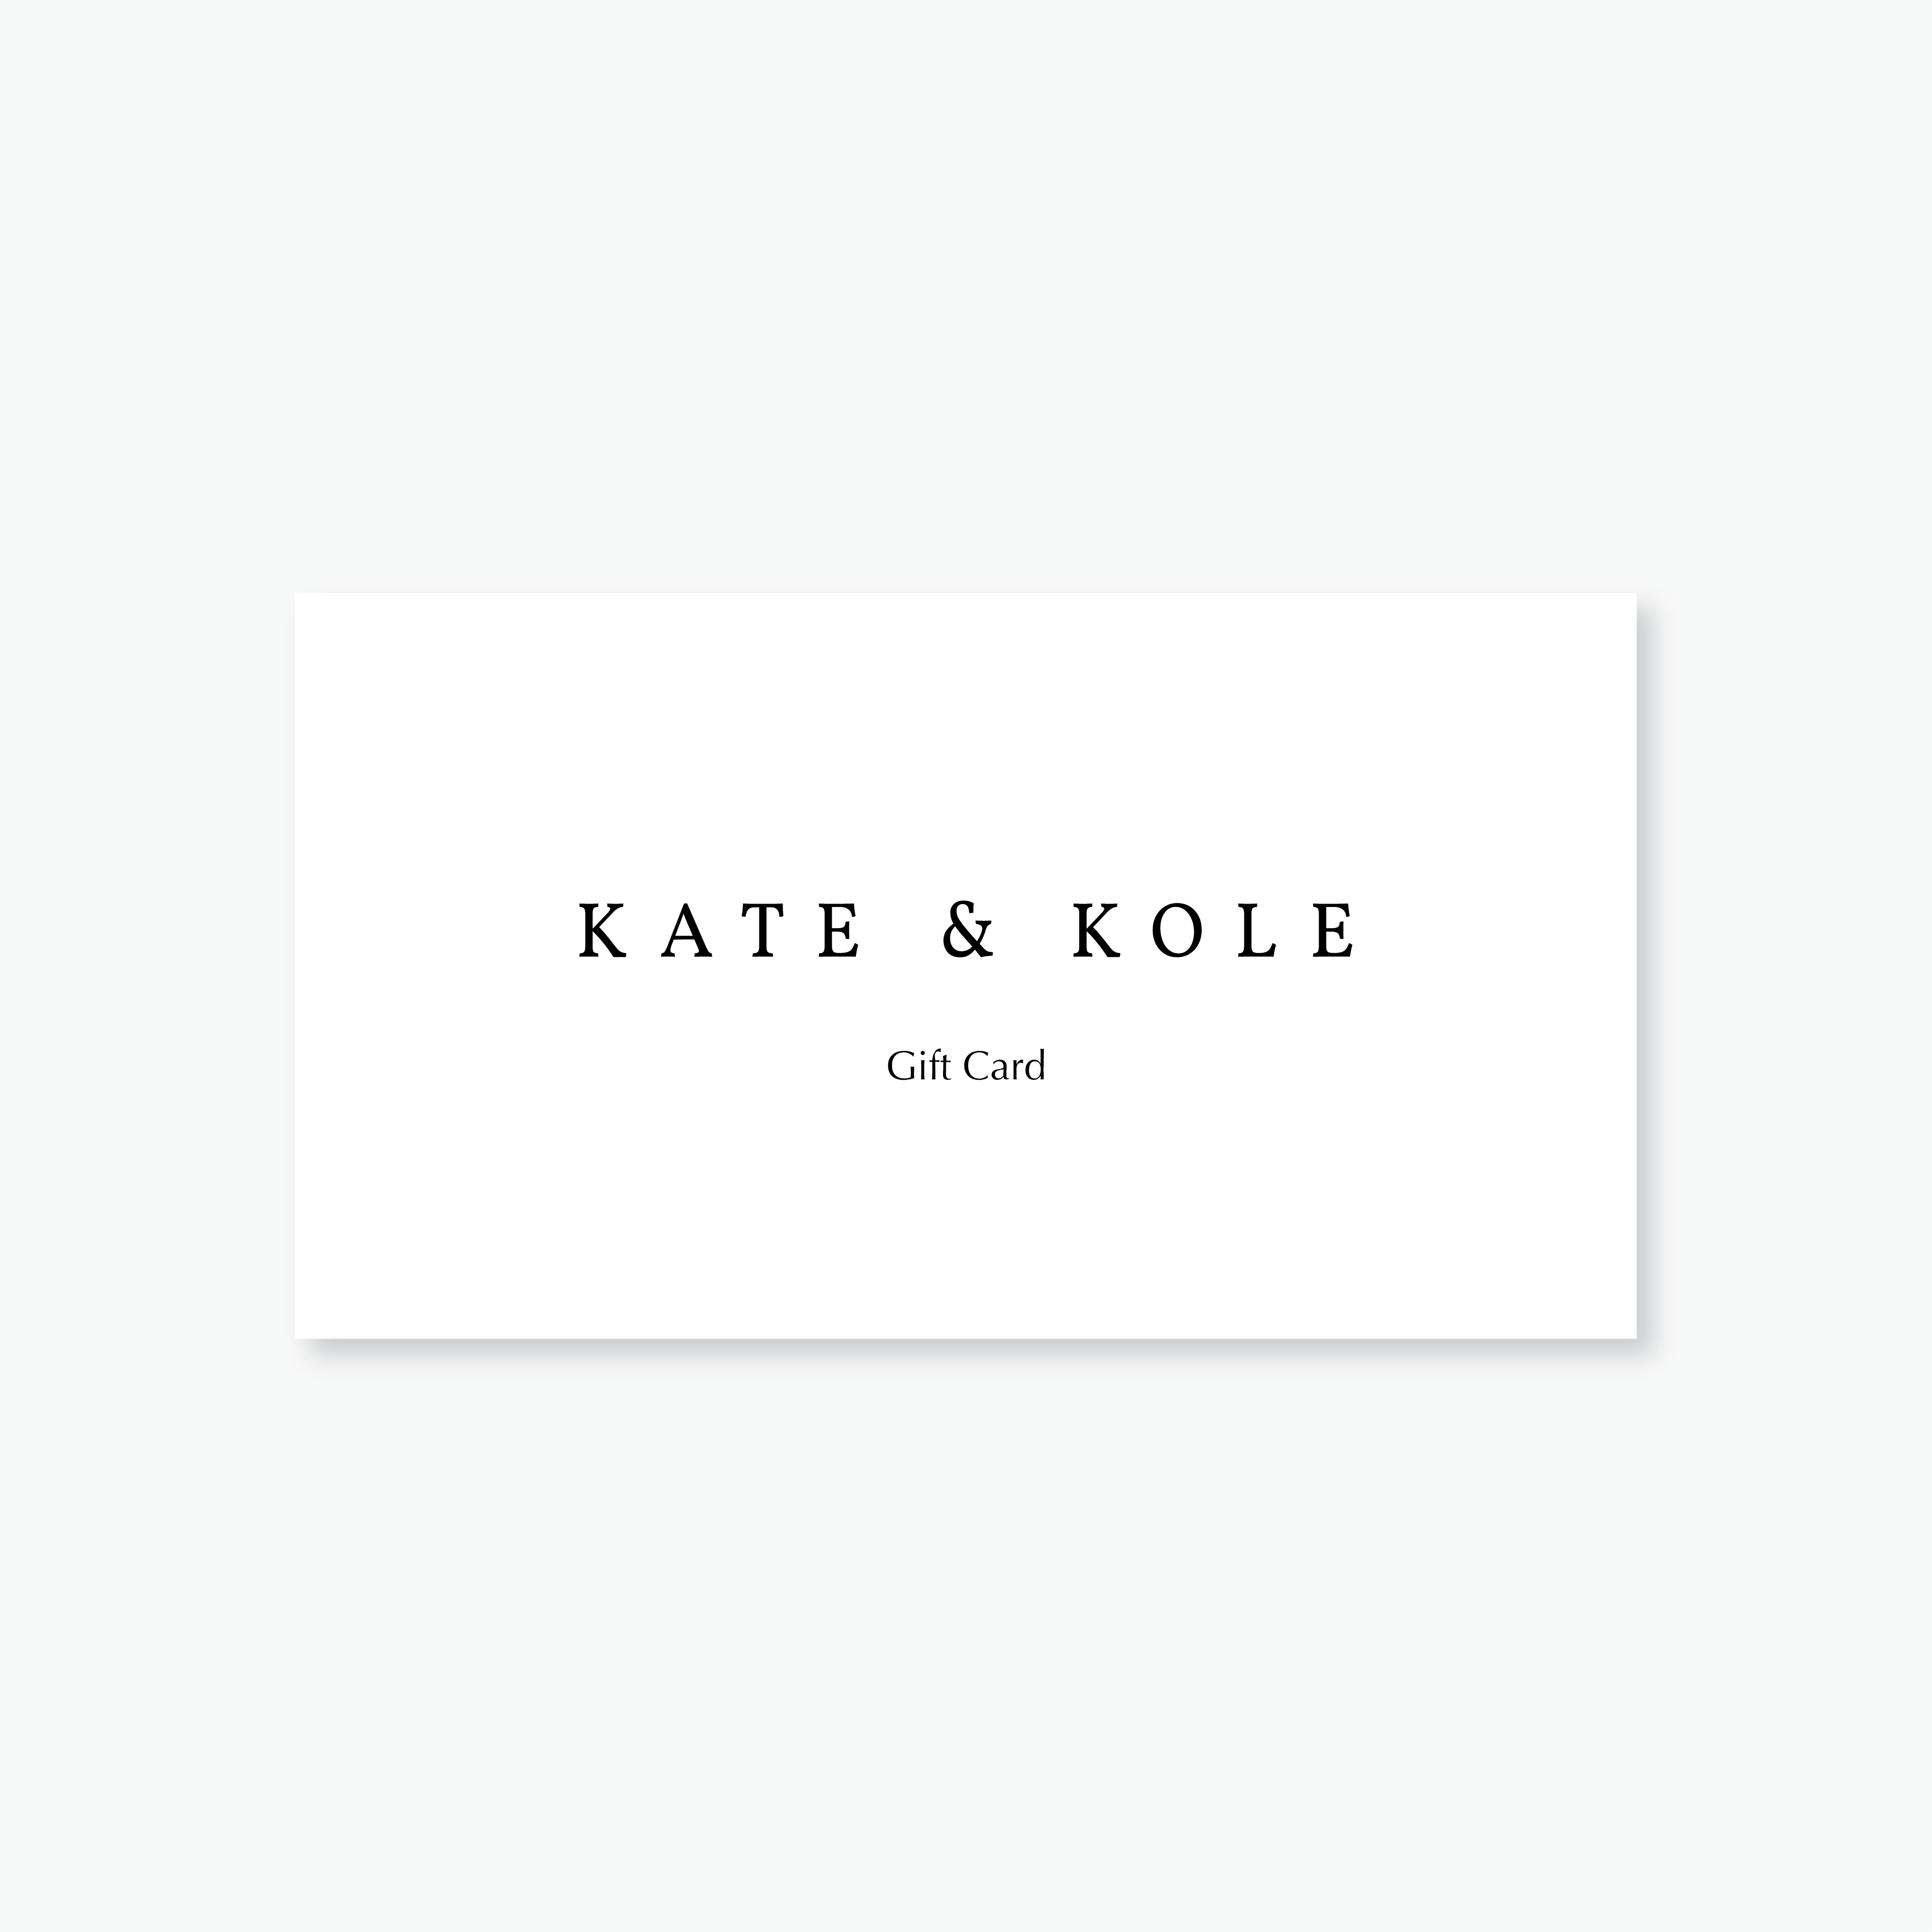 Kate & Kole Gift Card